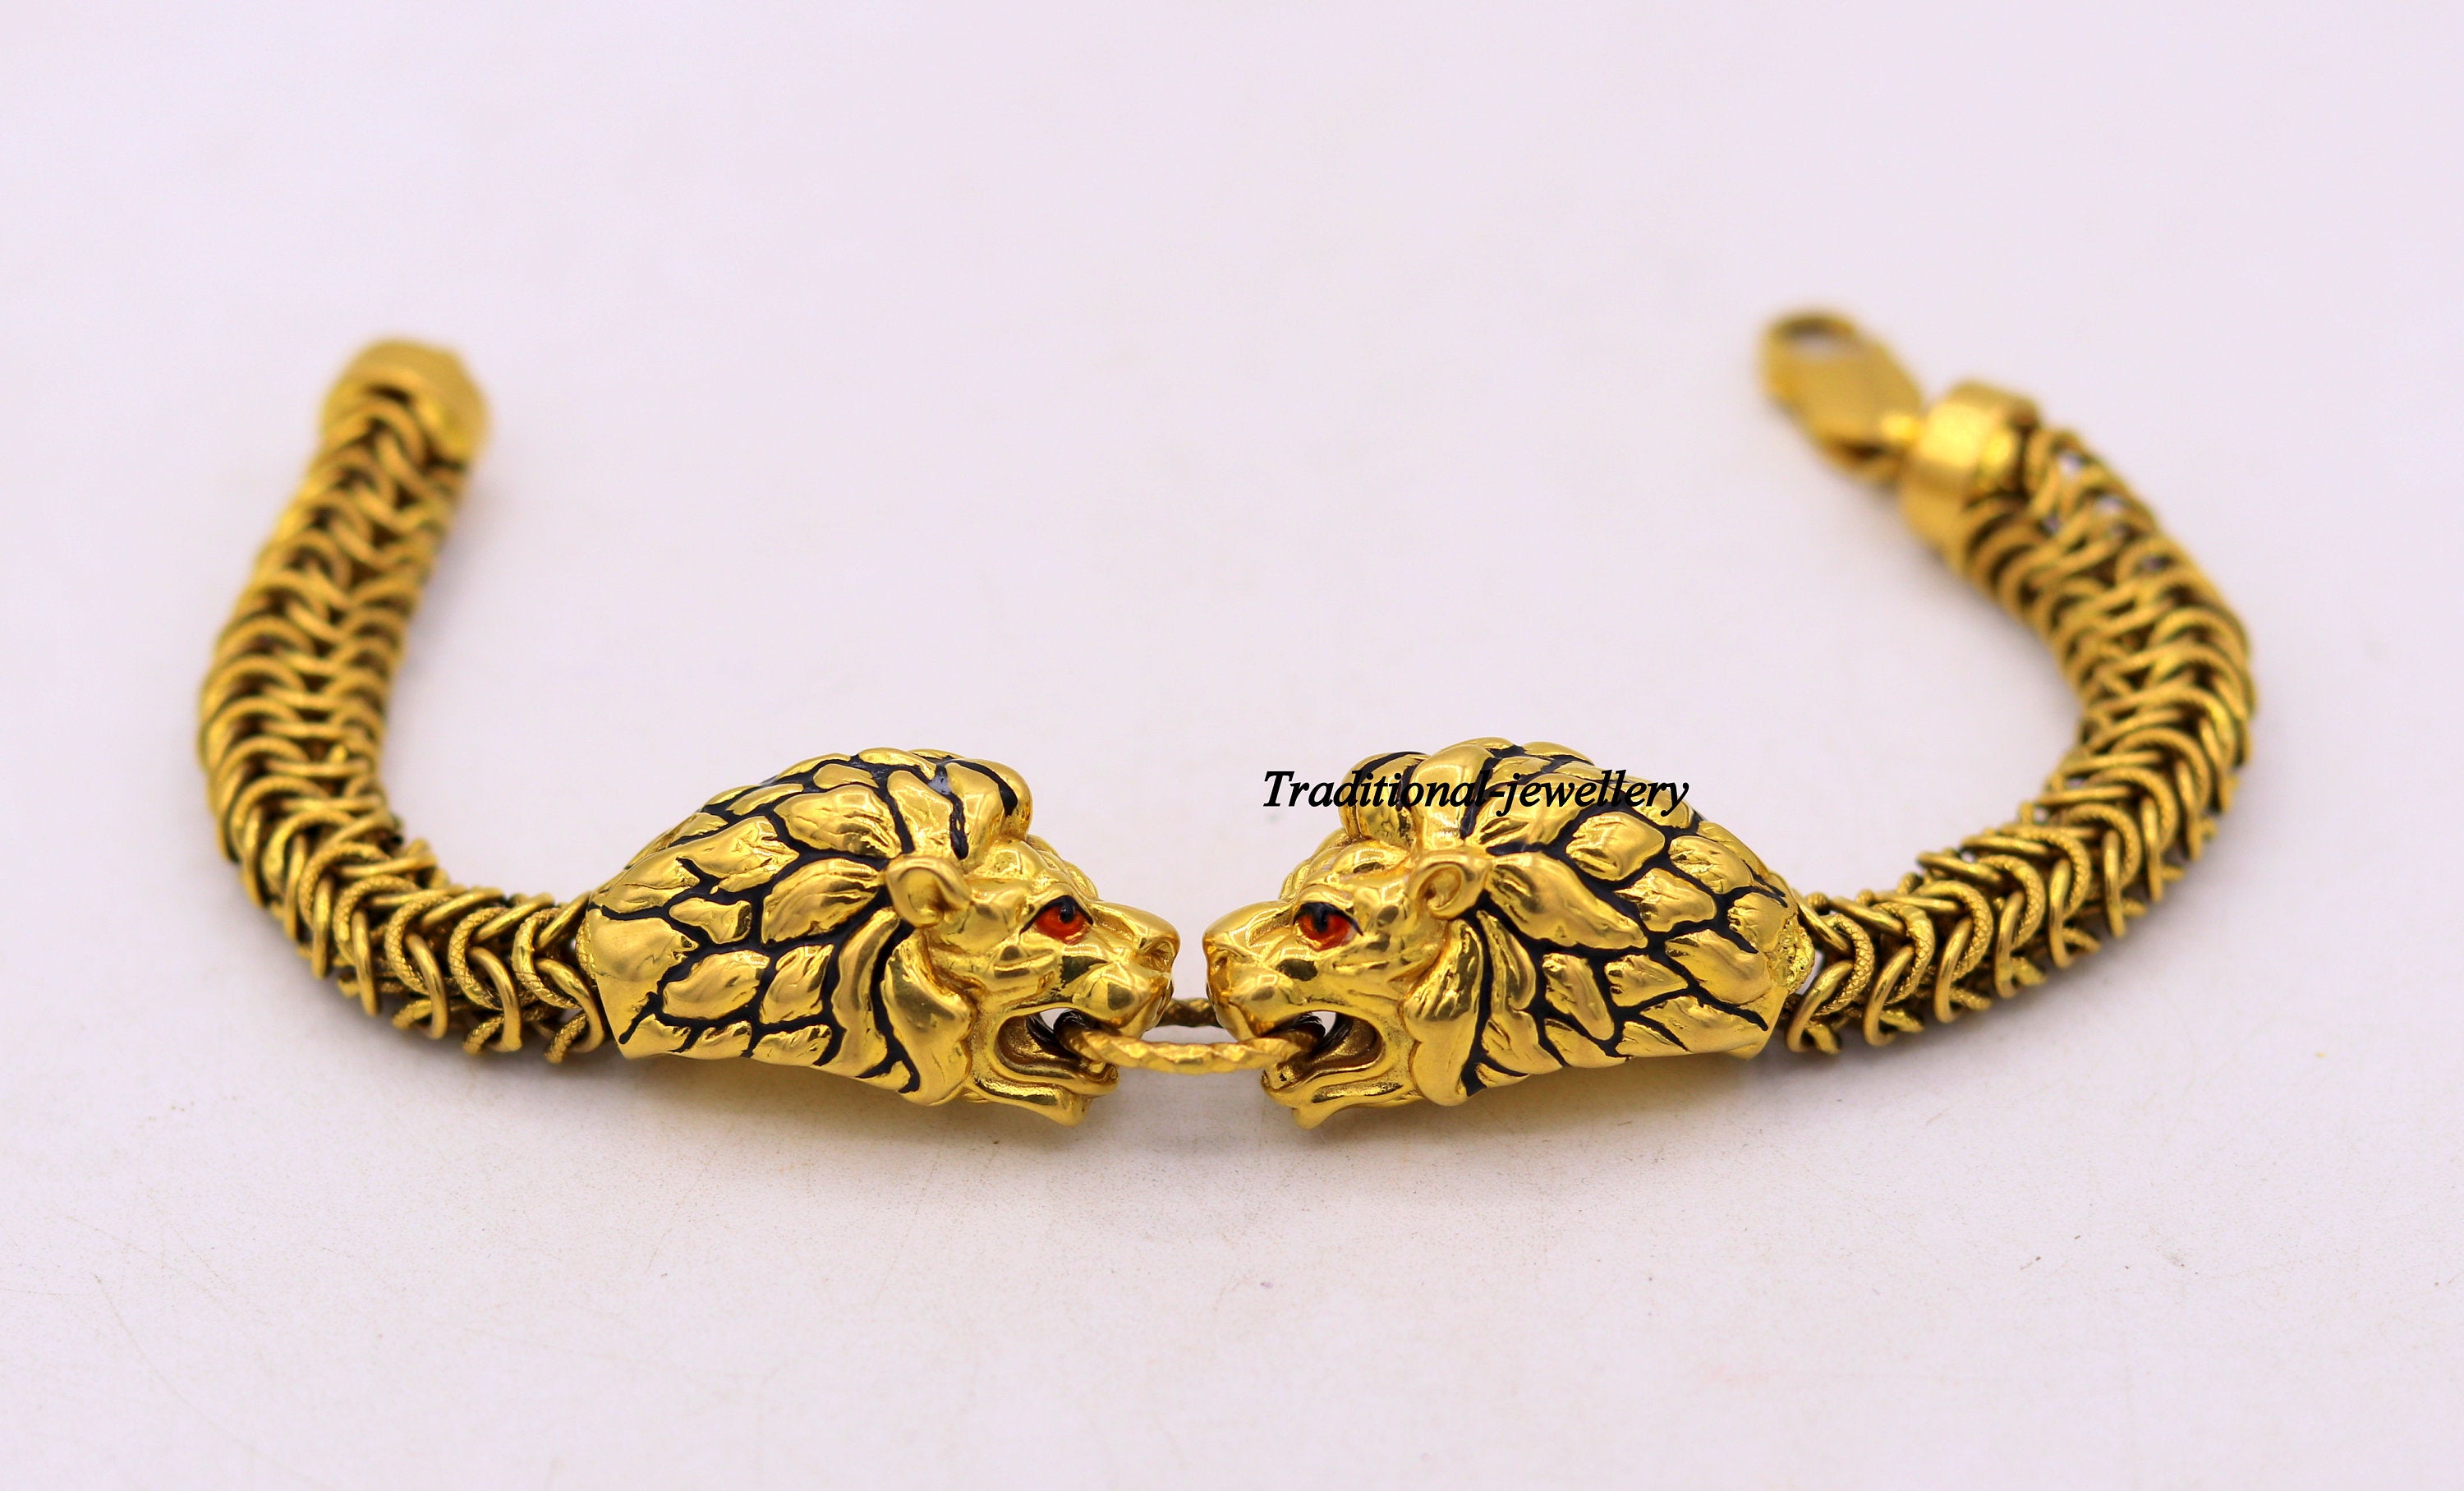 Buy Gold Bracelets & Kadas for Men by SANAA CREATIONS Online | Ajio.com